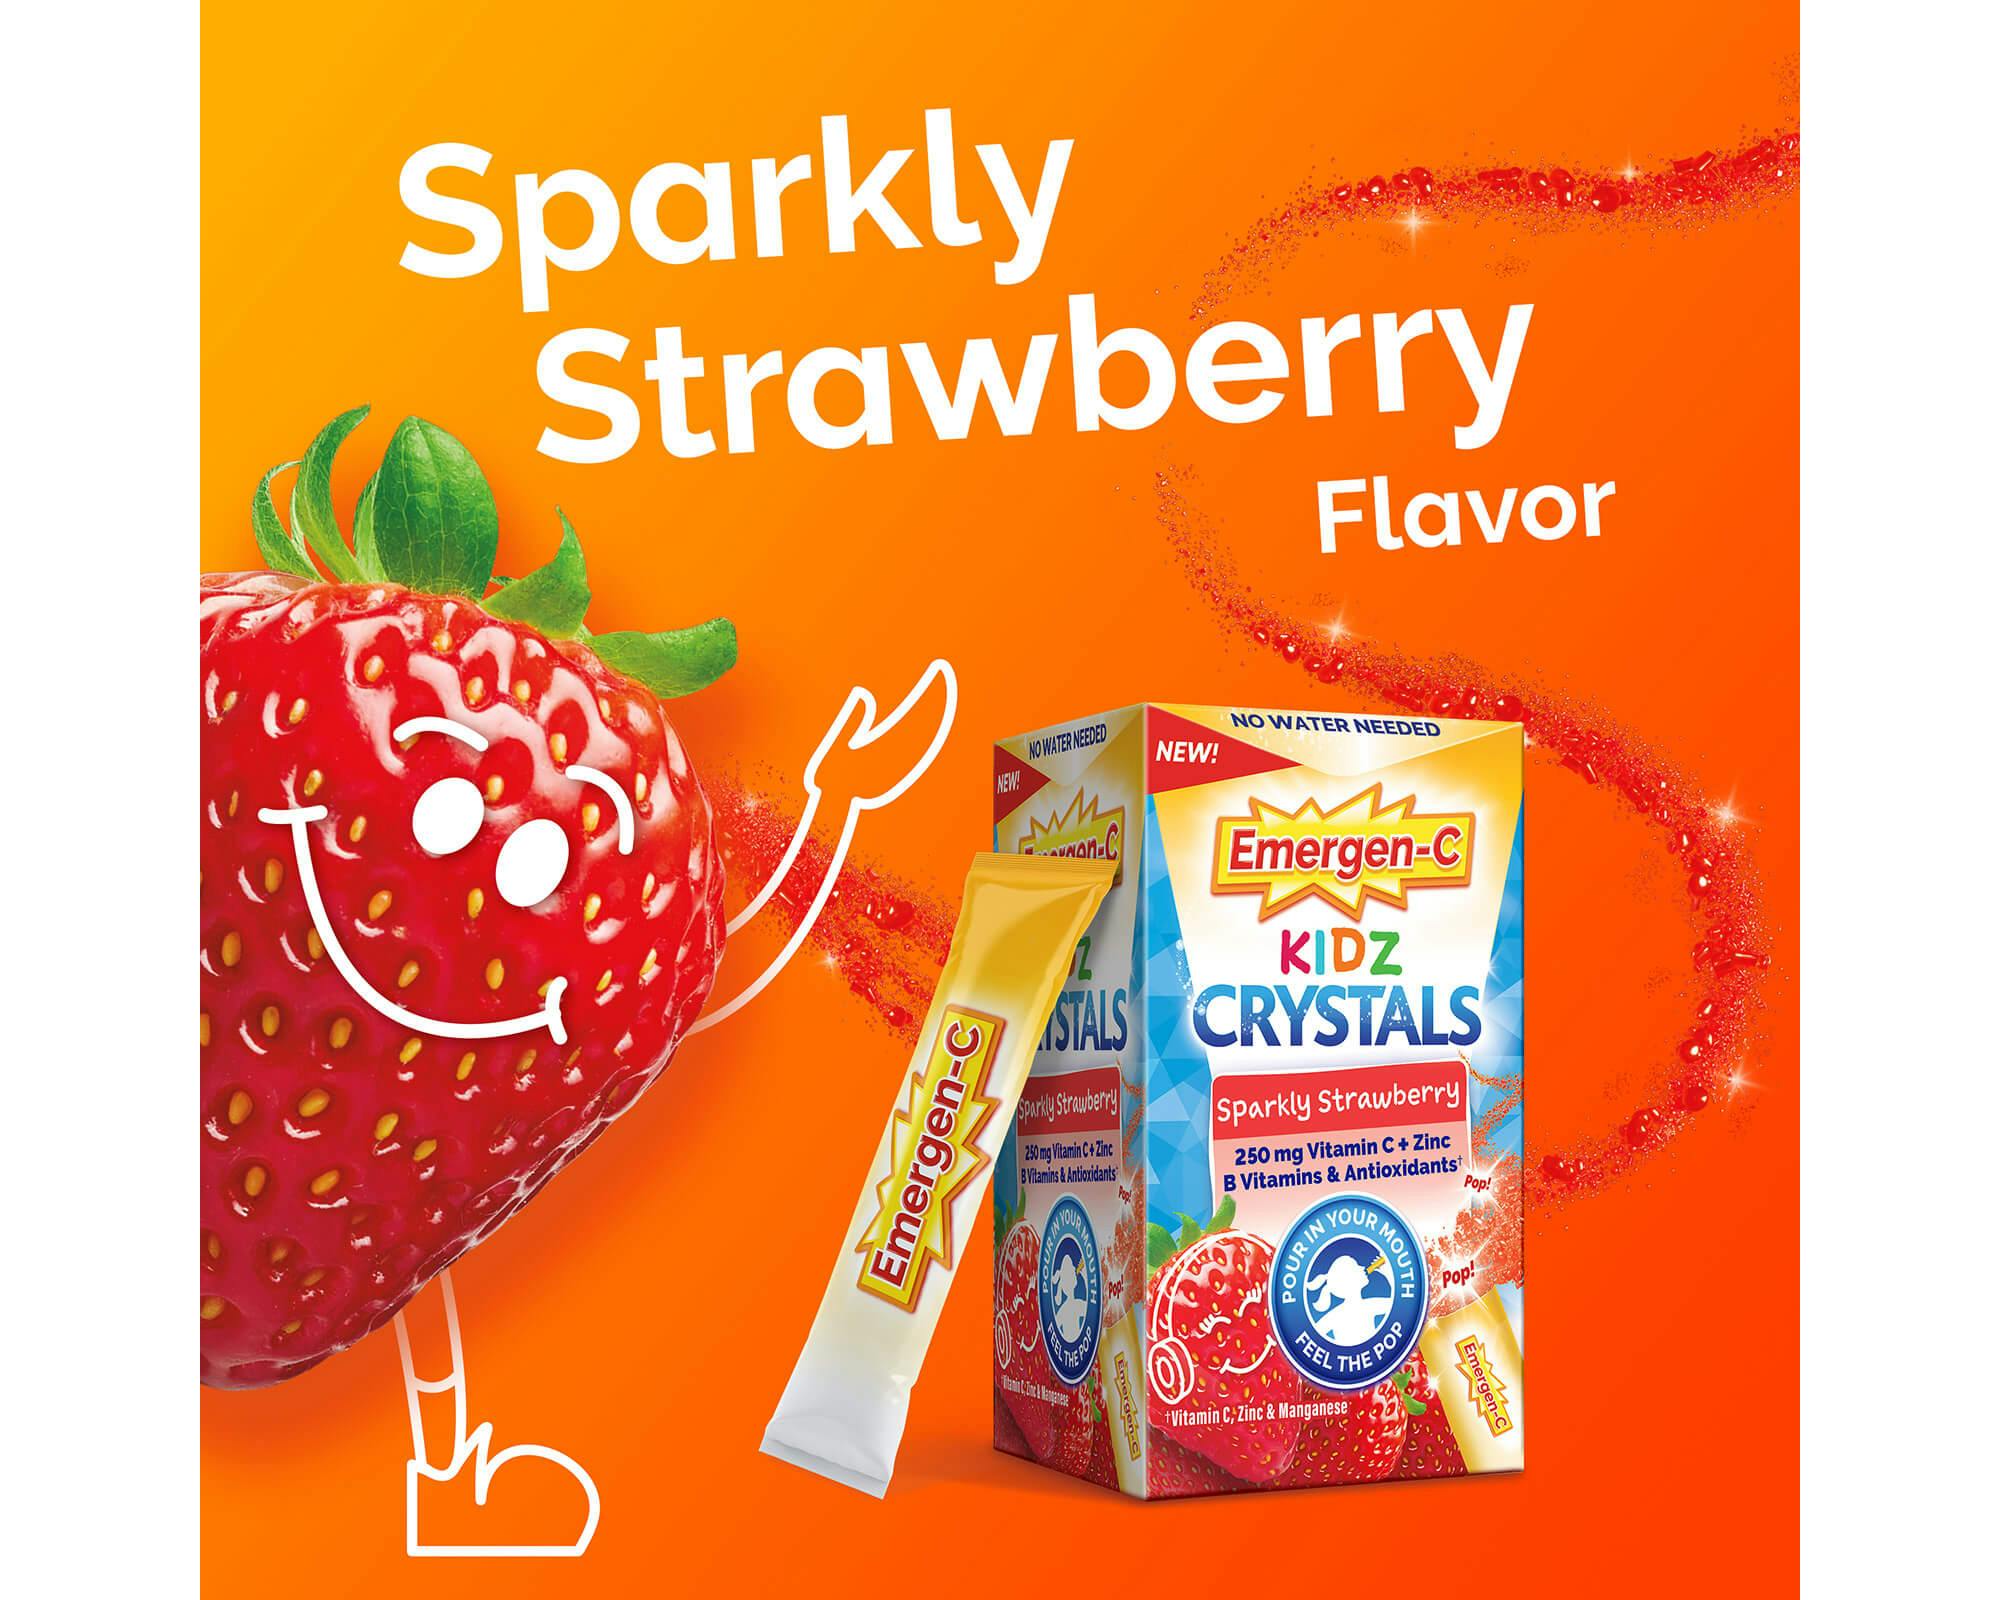 Emergen-C Kidz Crystals Sparkly Strawberry product with strawberry